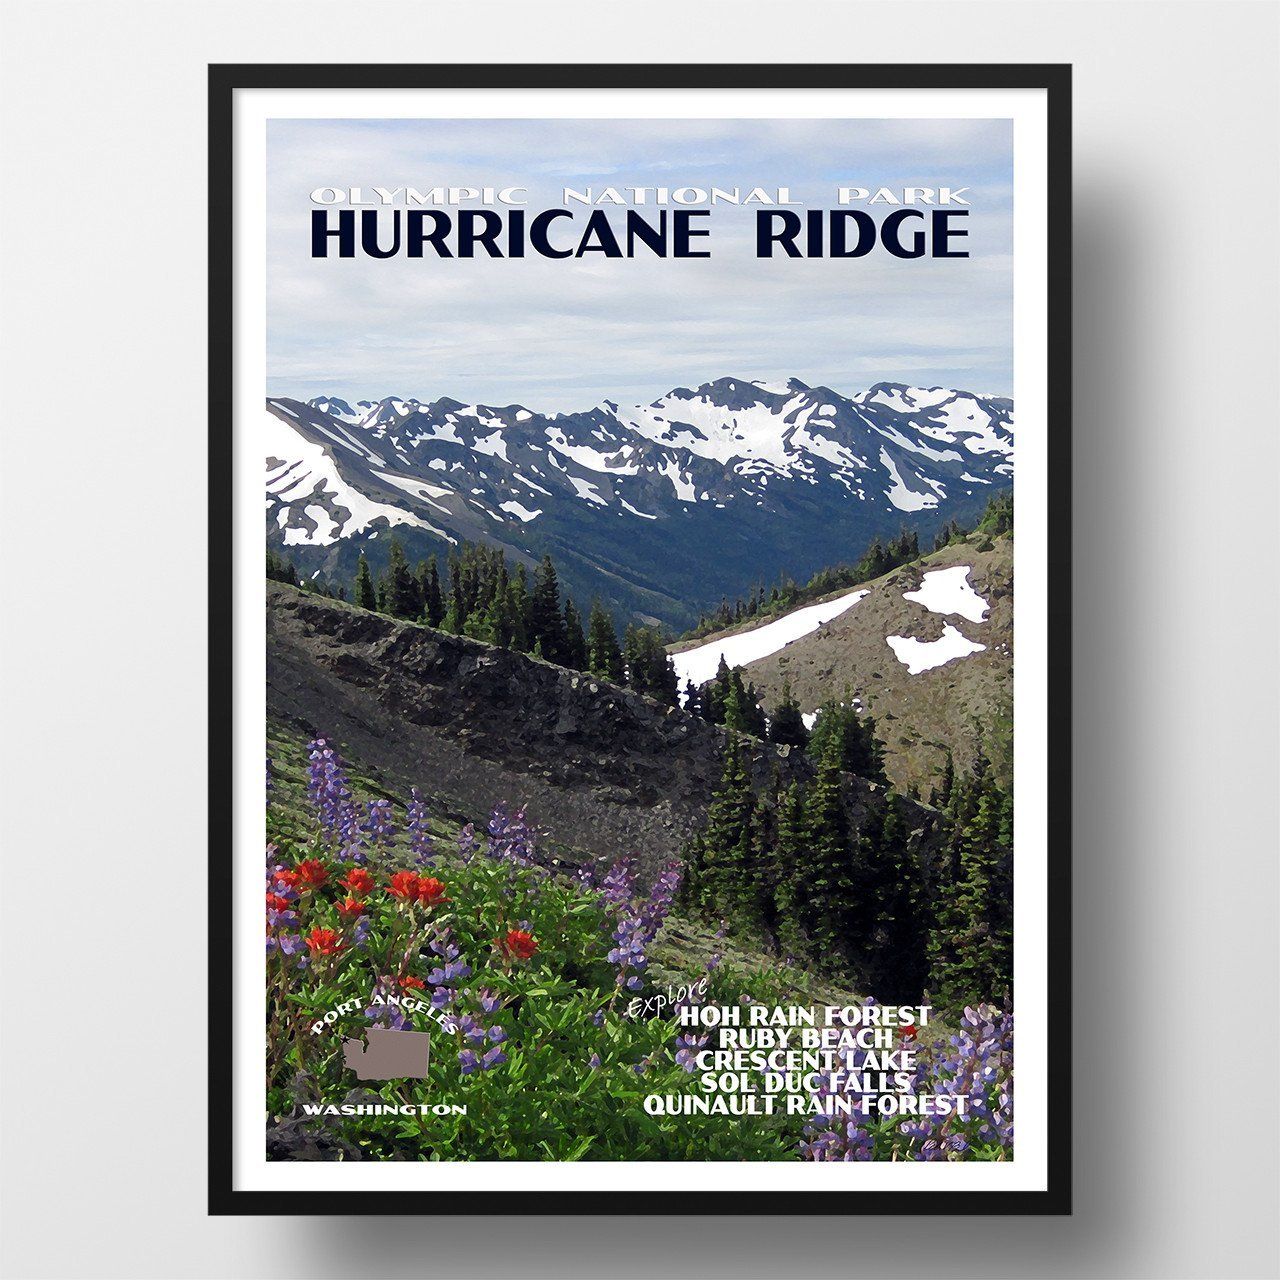 Olympic National Park Poster-Hurricane Ridge Wildflowers